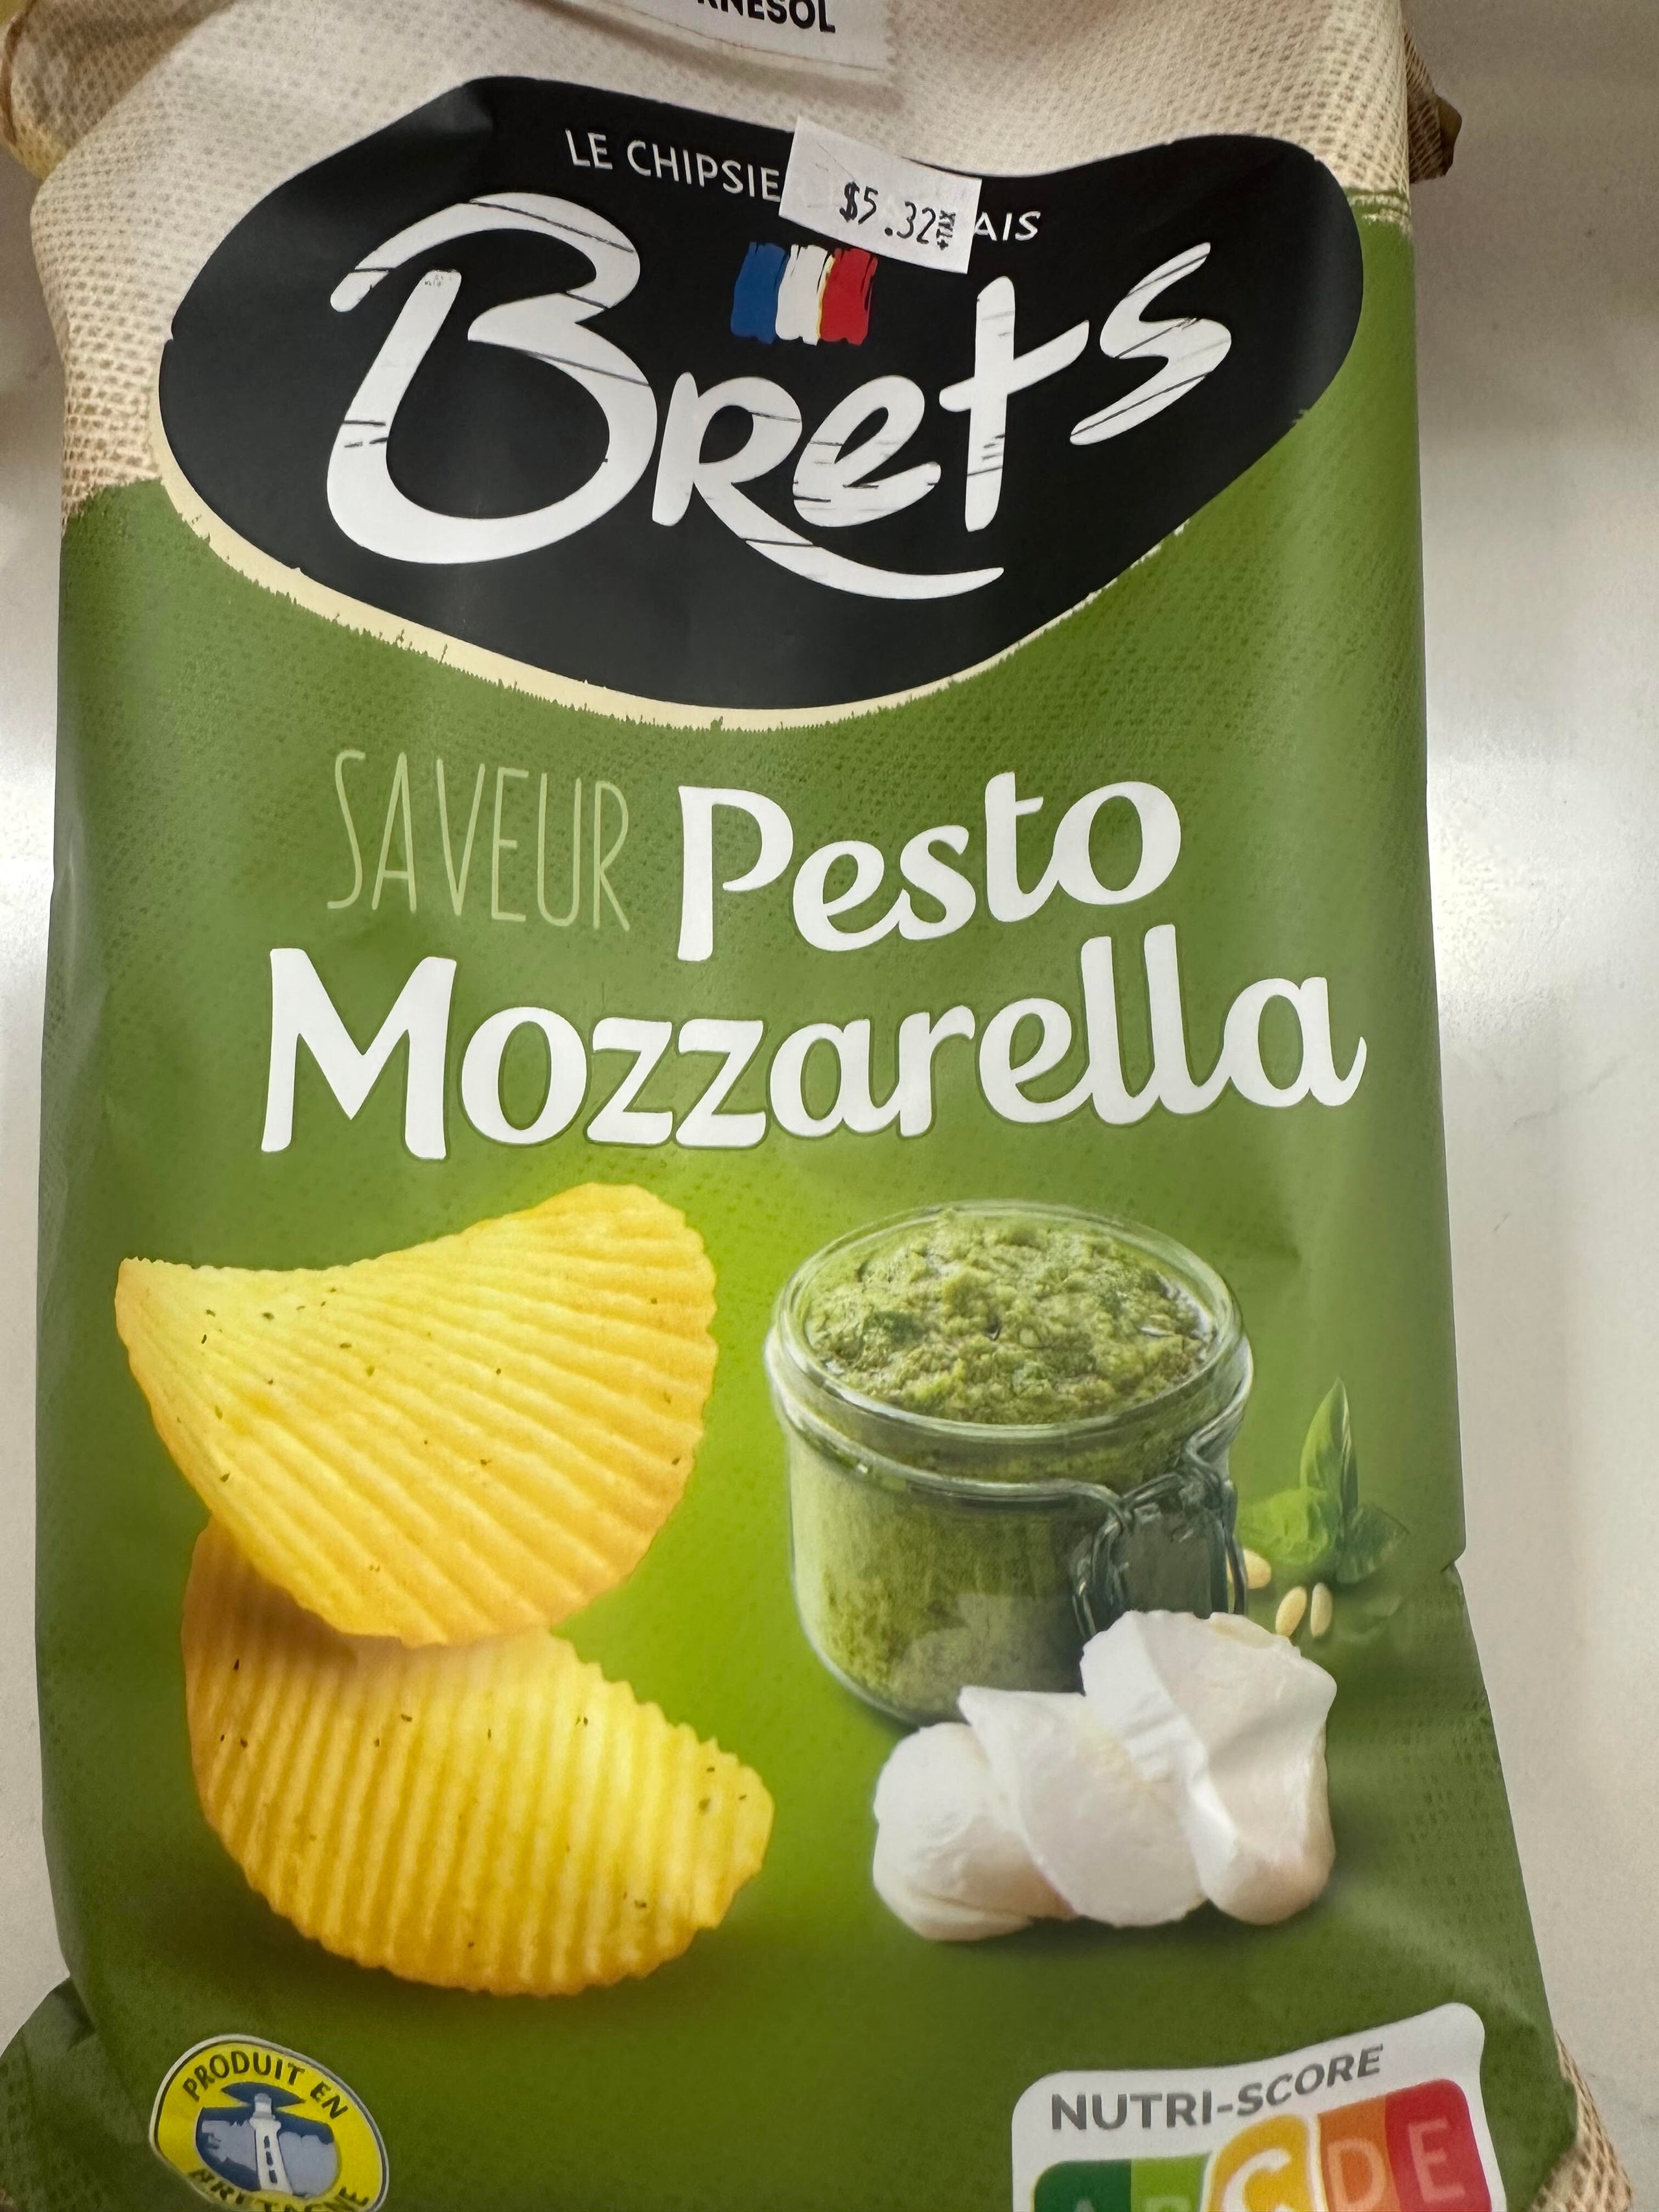 Brets Chips Pesto & Mozzarella 125g